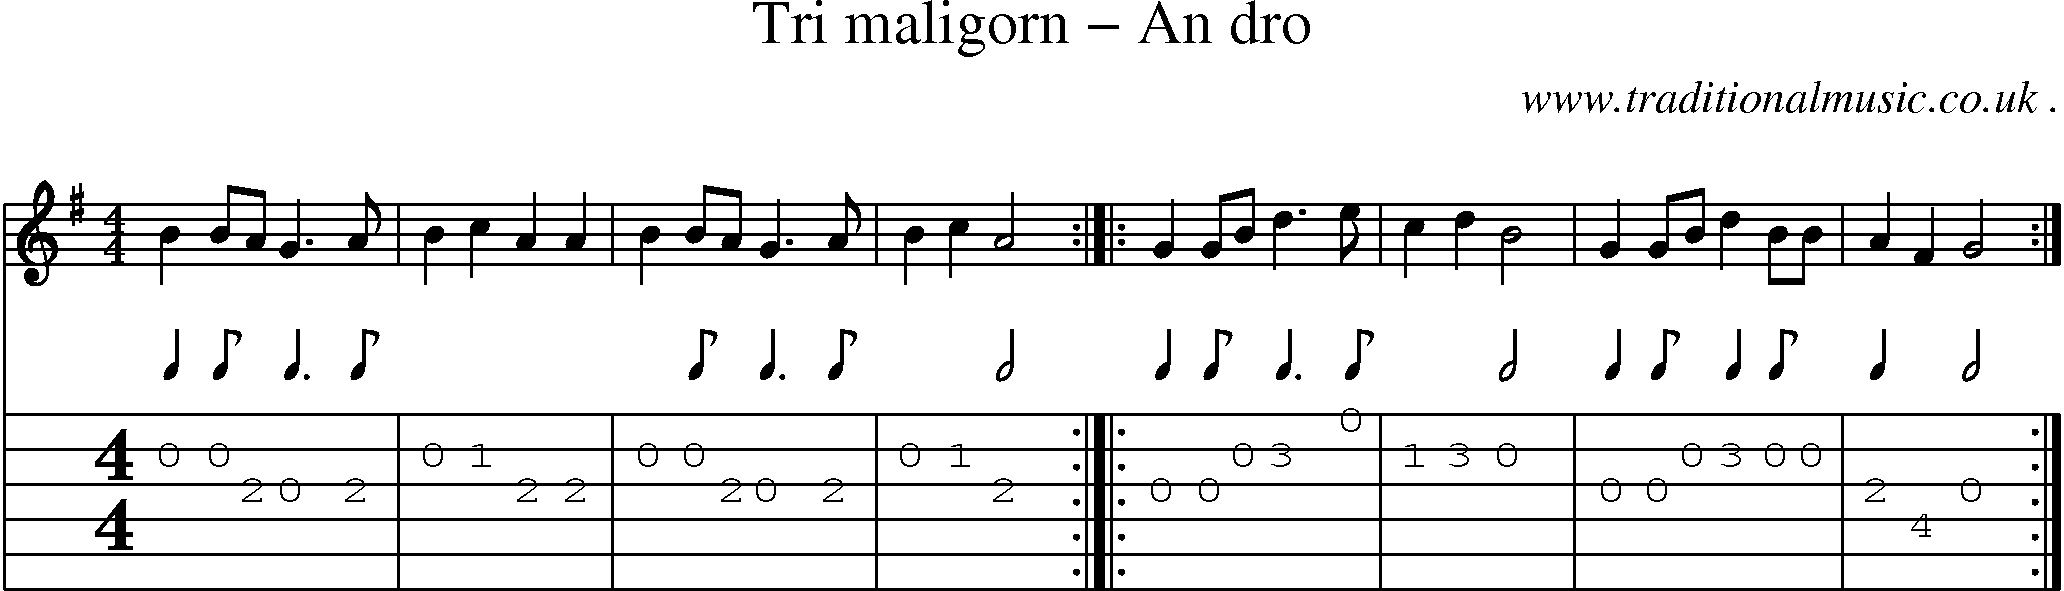 Sheet-Music and Guitar Tabs for Tri Maligorn An Dro